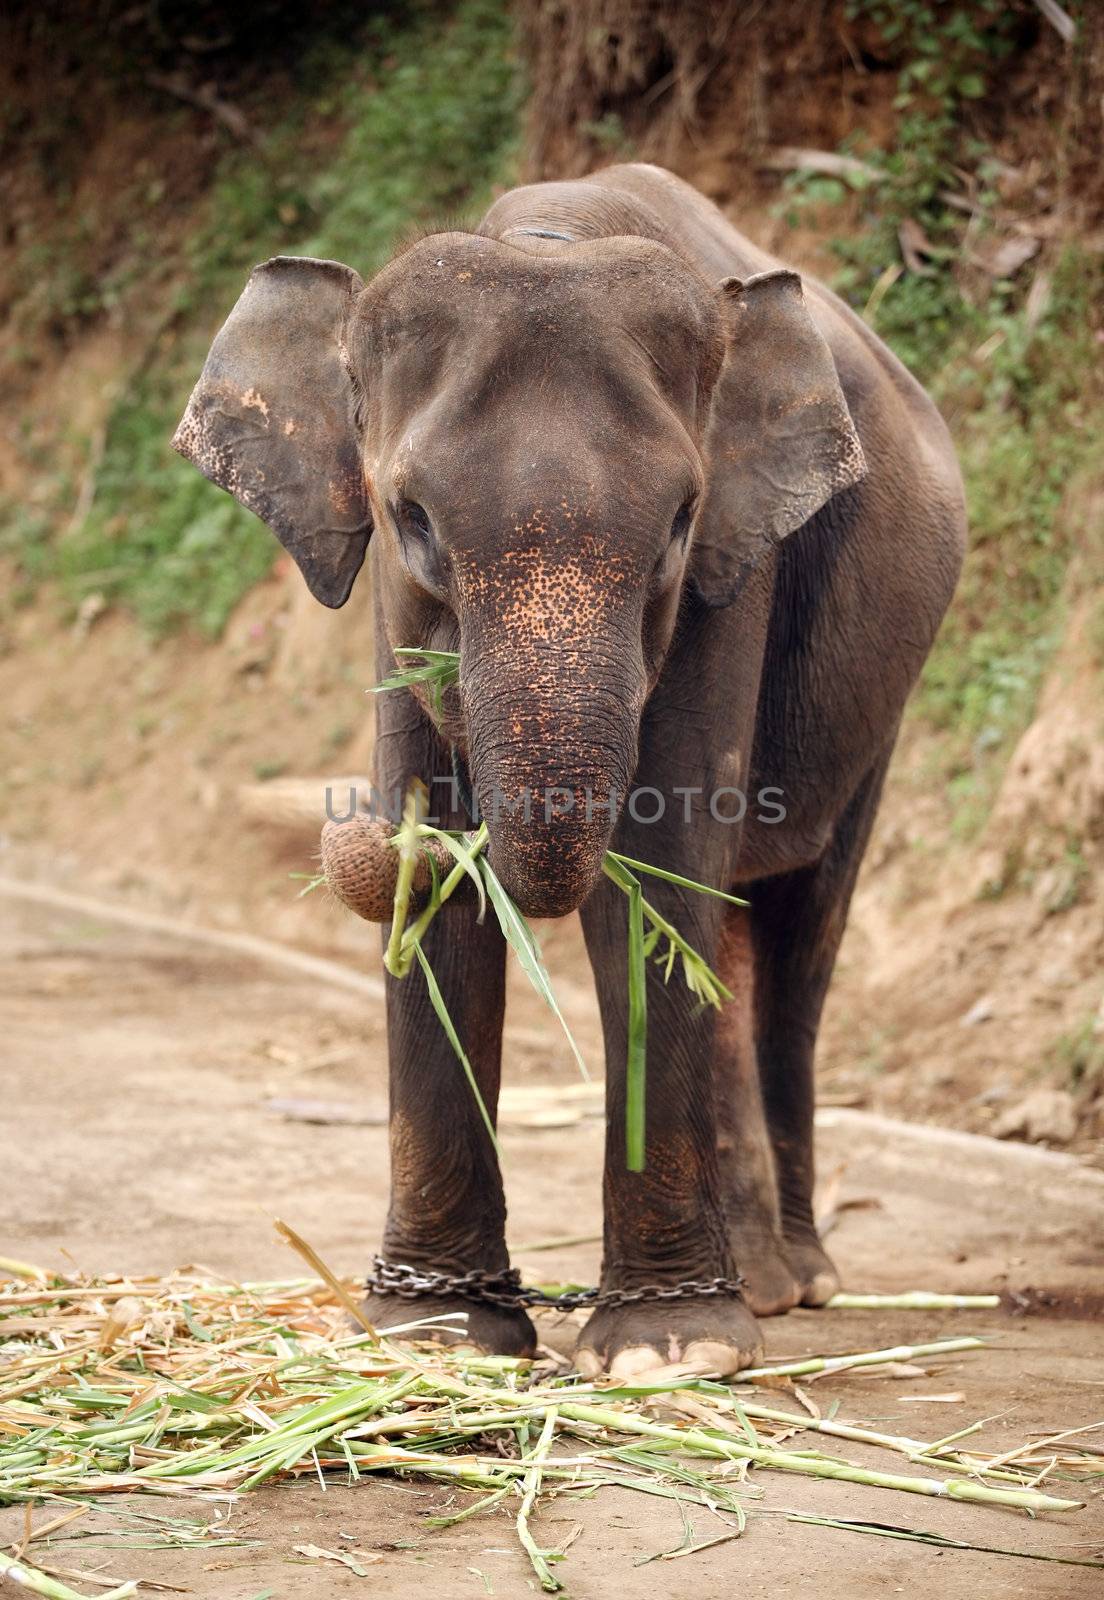 Elephant by friday